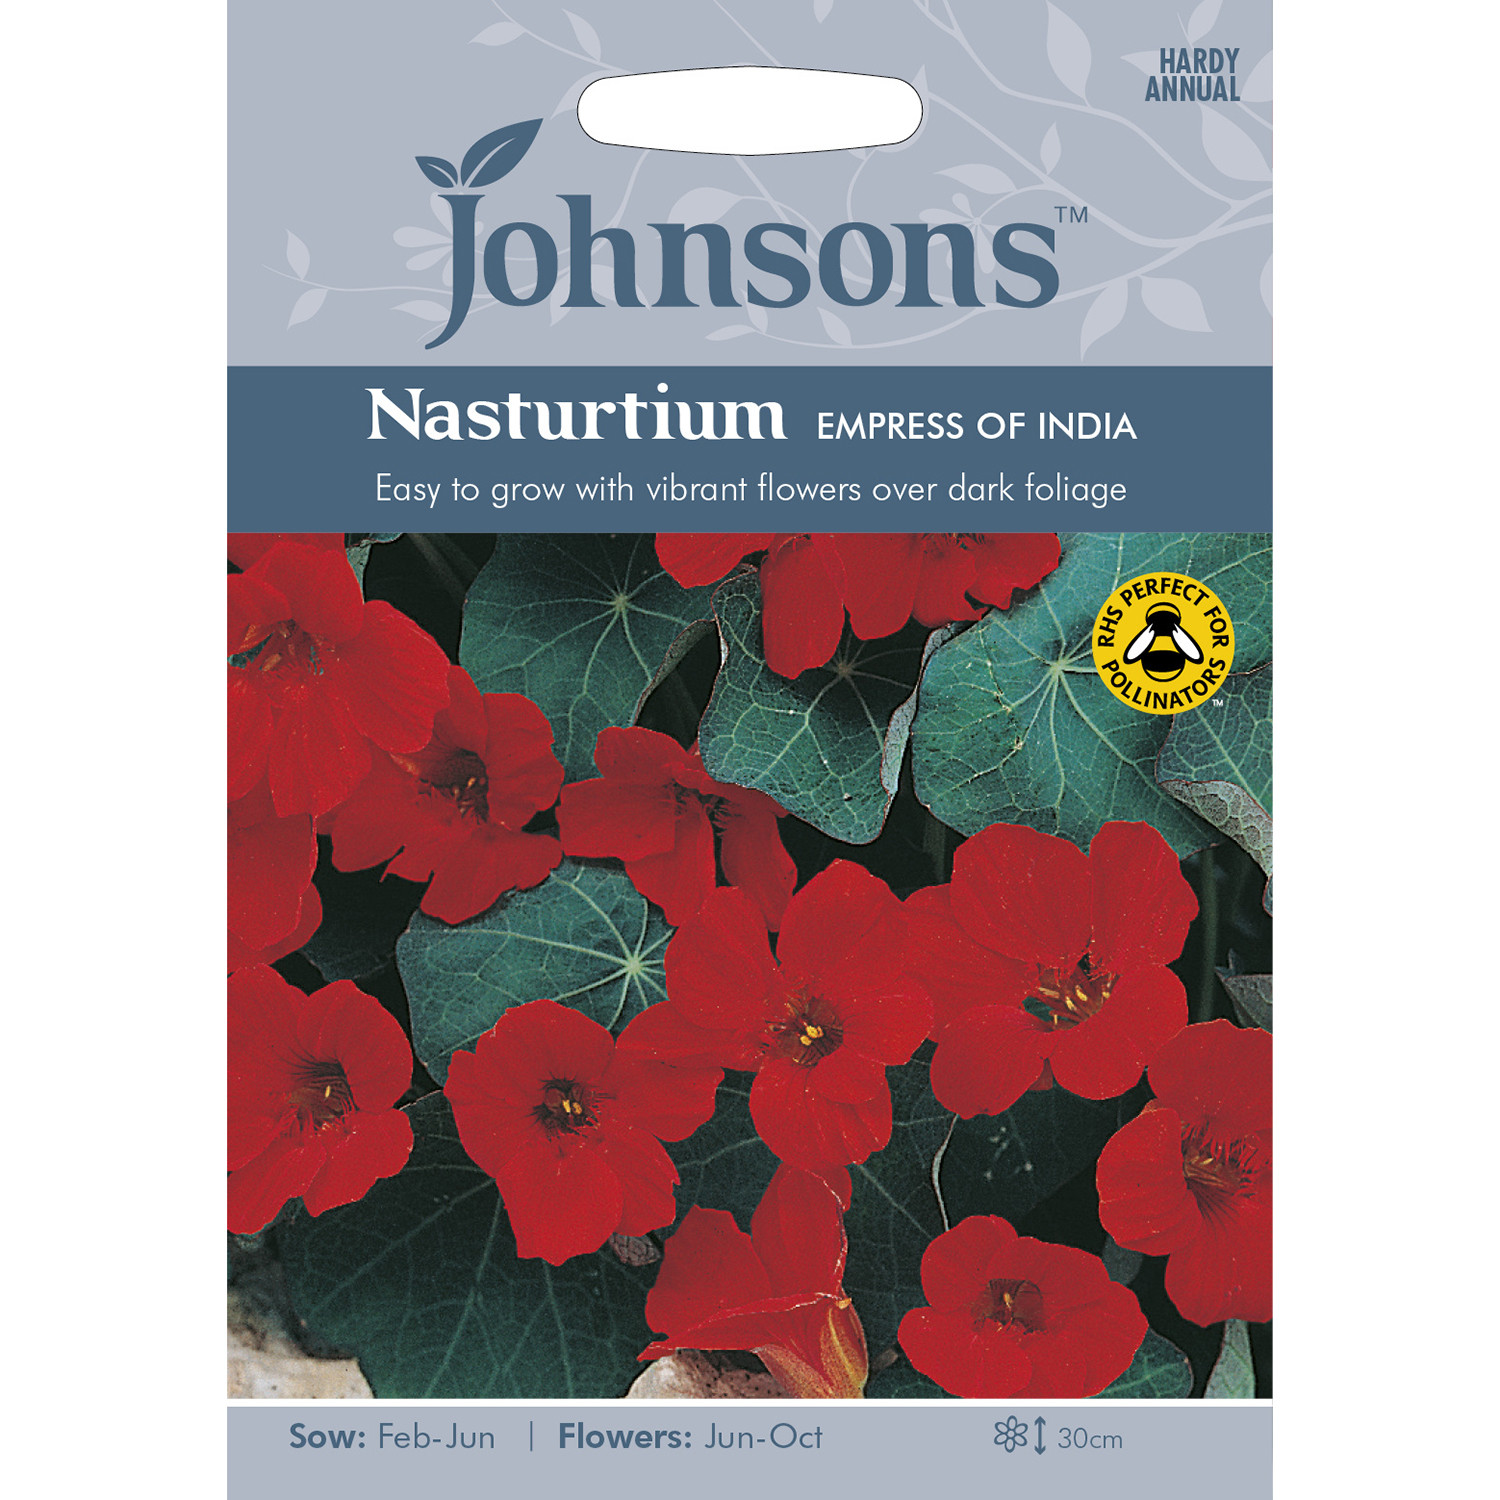 Johnsons Nasturtium Empress of India Flower Seeds Image 2